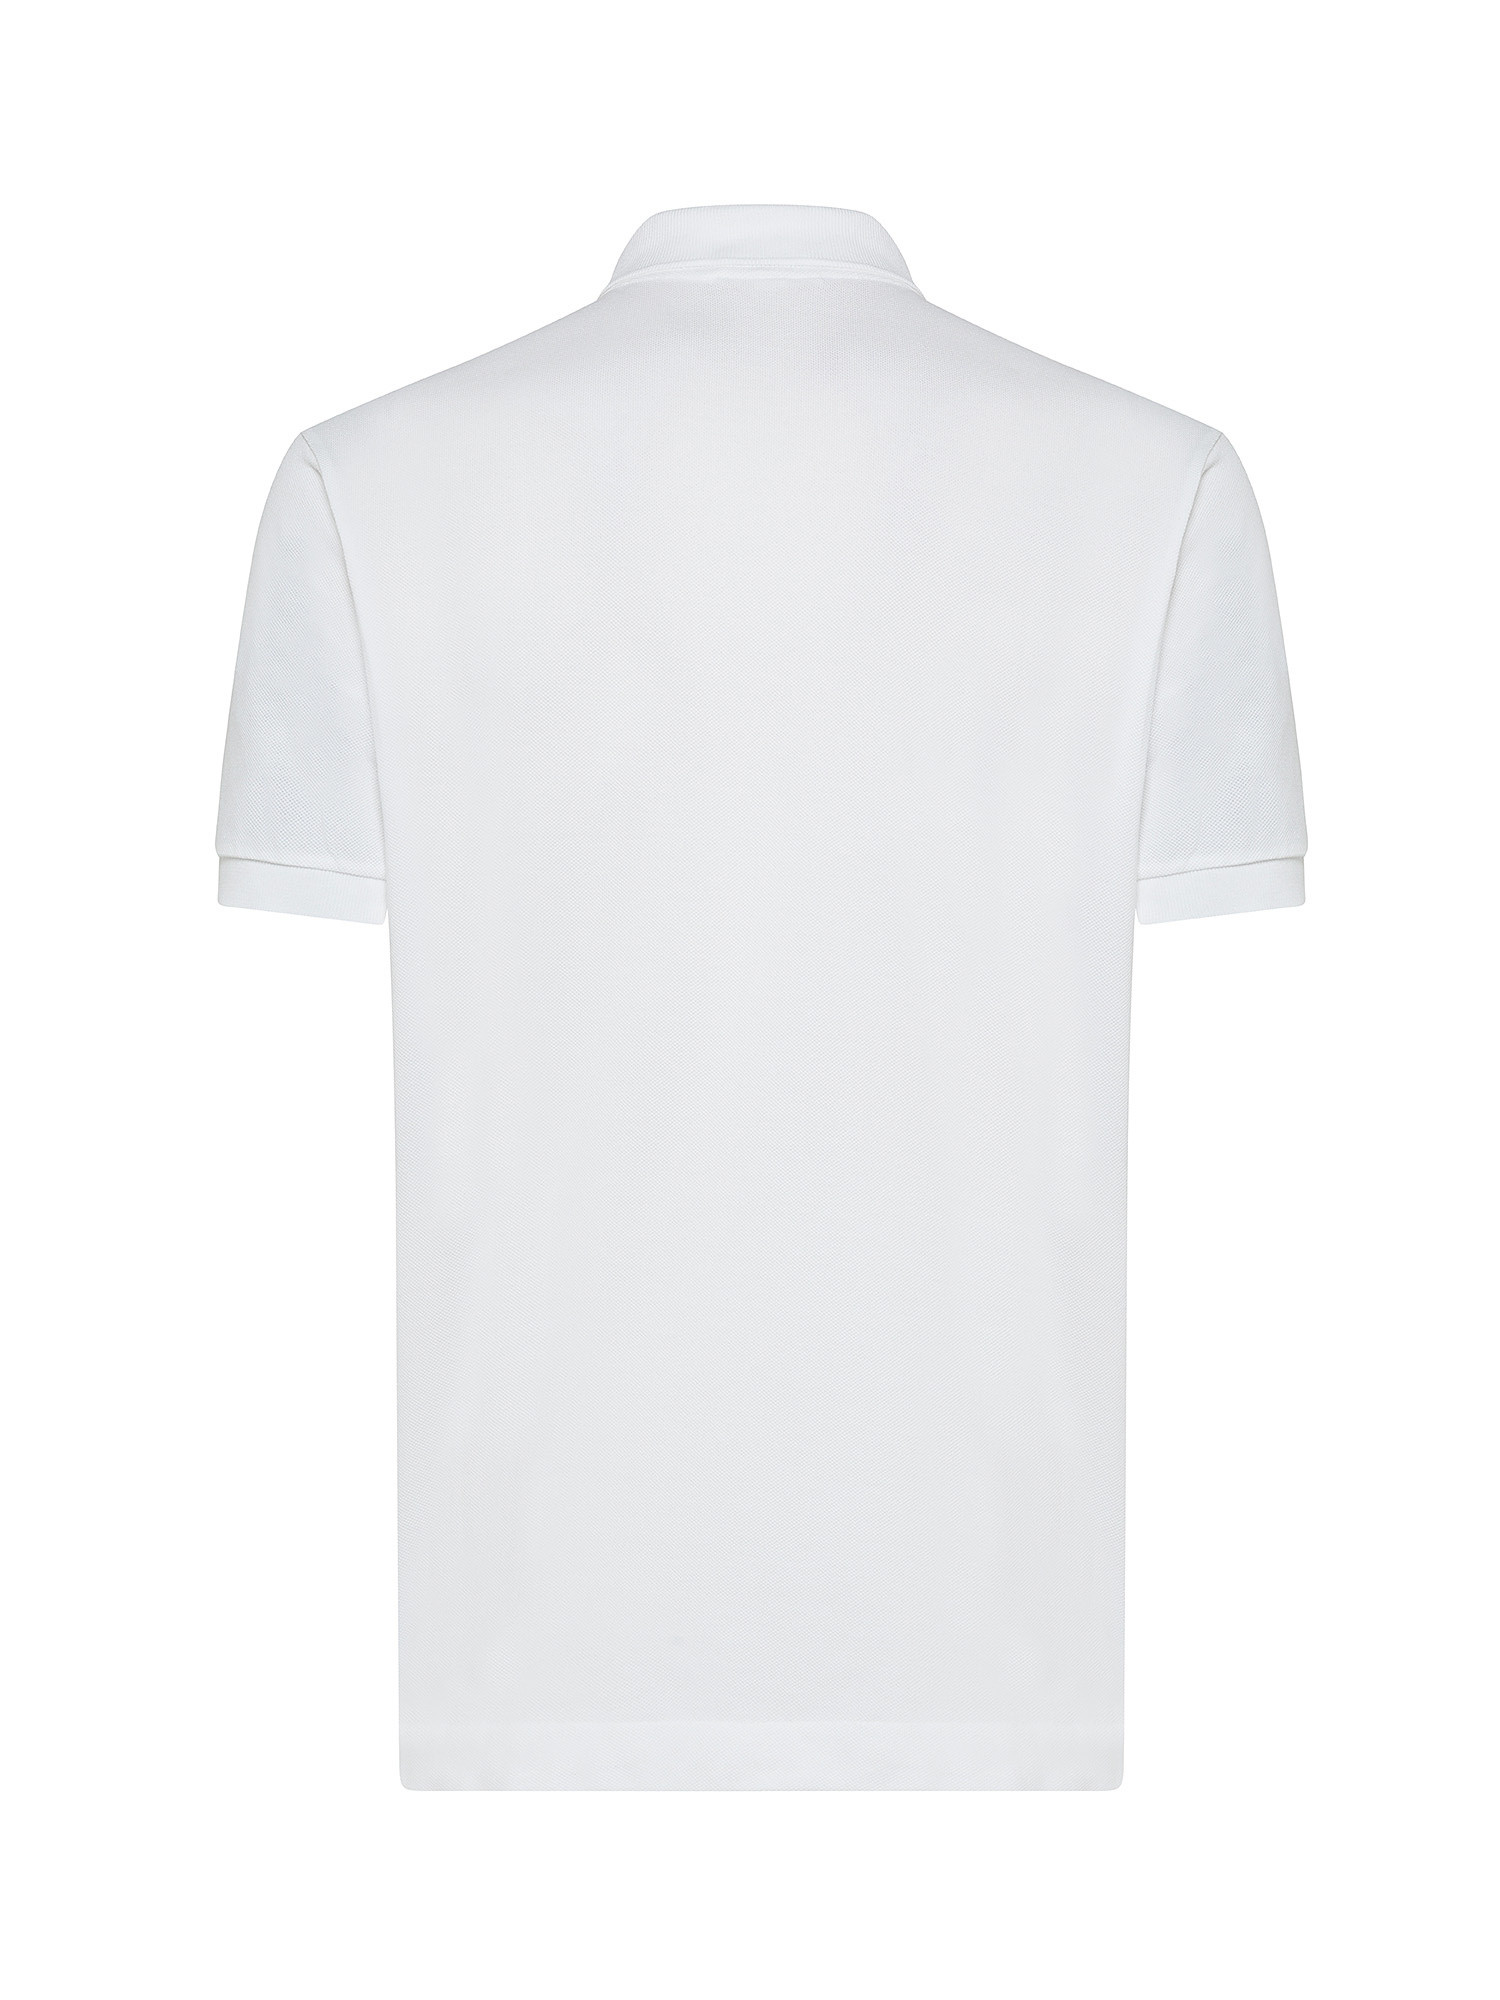 Lacoste - Classic cut polo shirt in petit piquè cotton, White, large image number 1